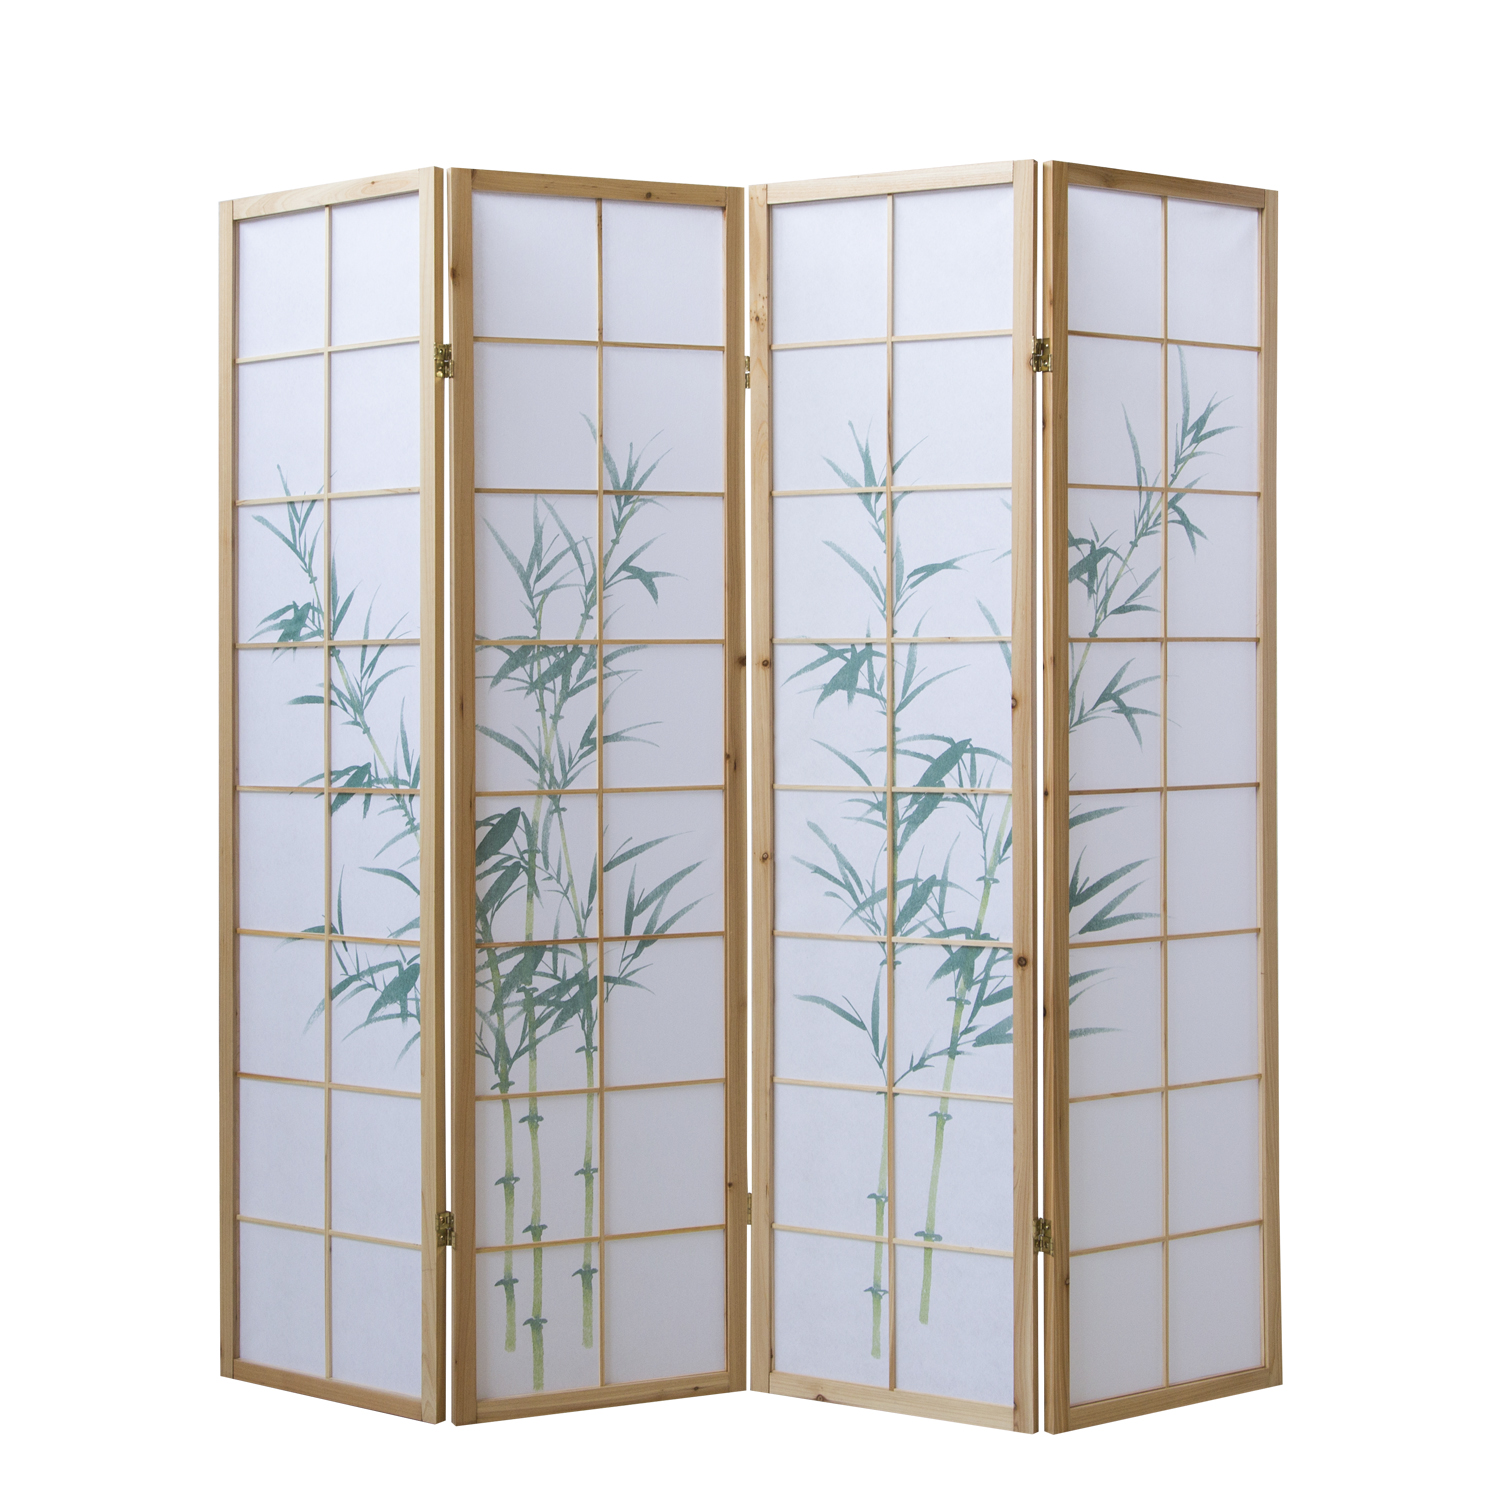 Paravent Raumteiler 4 teilig, Holz Natur, Reispapier Weiß, Bambusmuster, Höhe 175 cm	